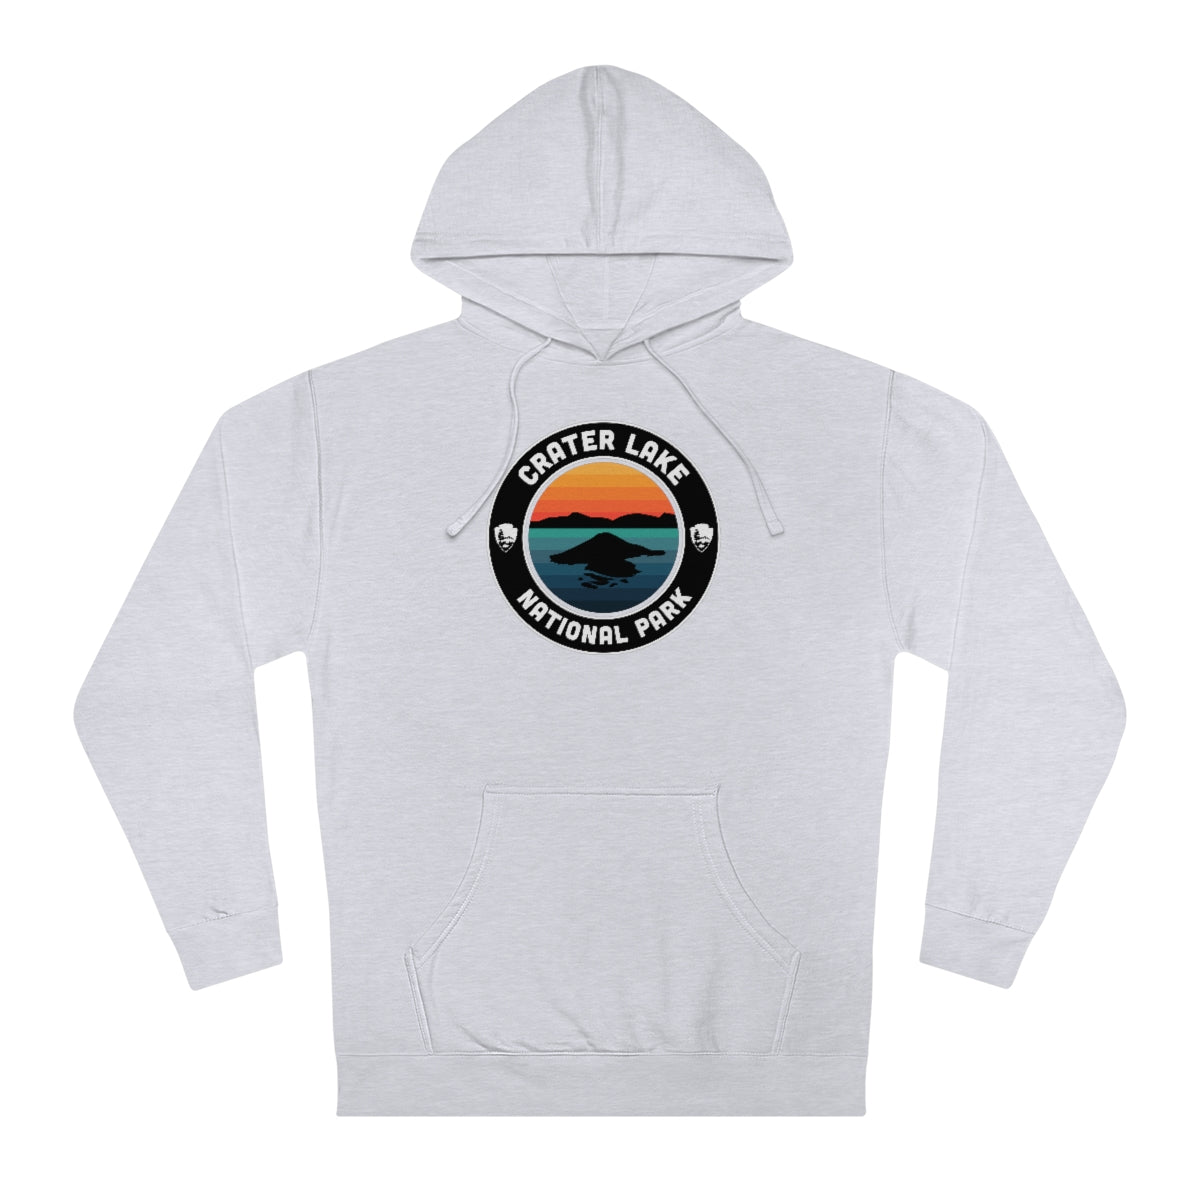 Crater Lake National Park Hoodie - Round Emblem Design